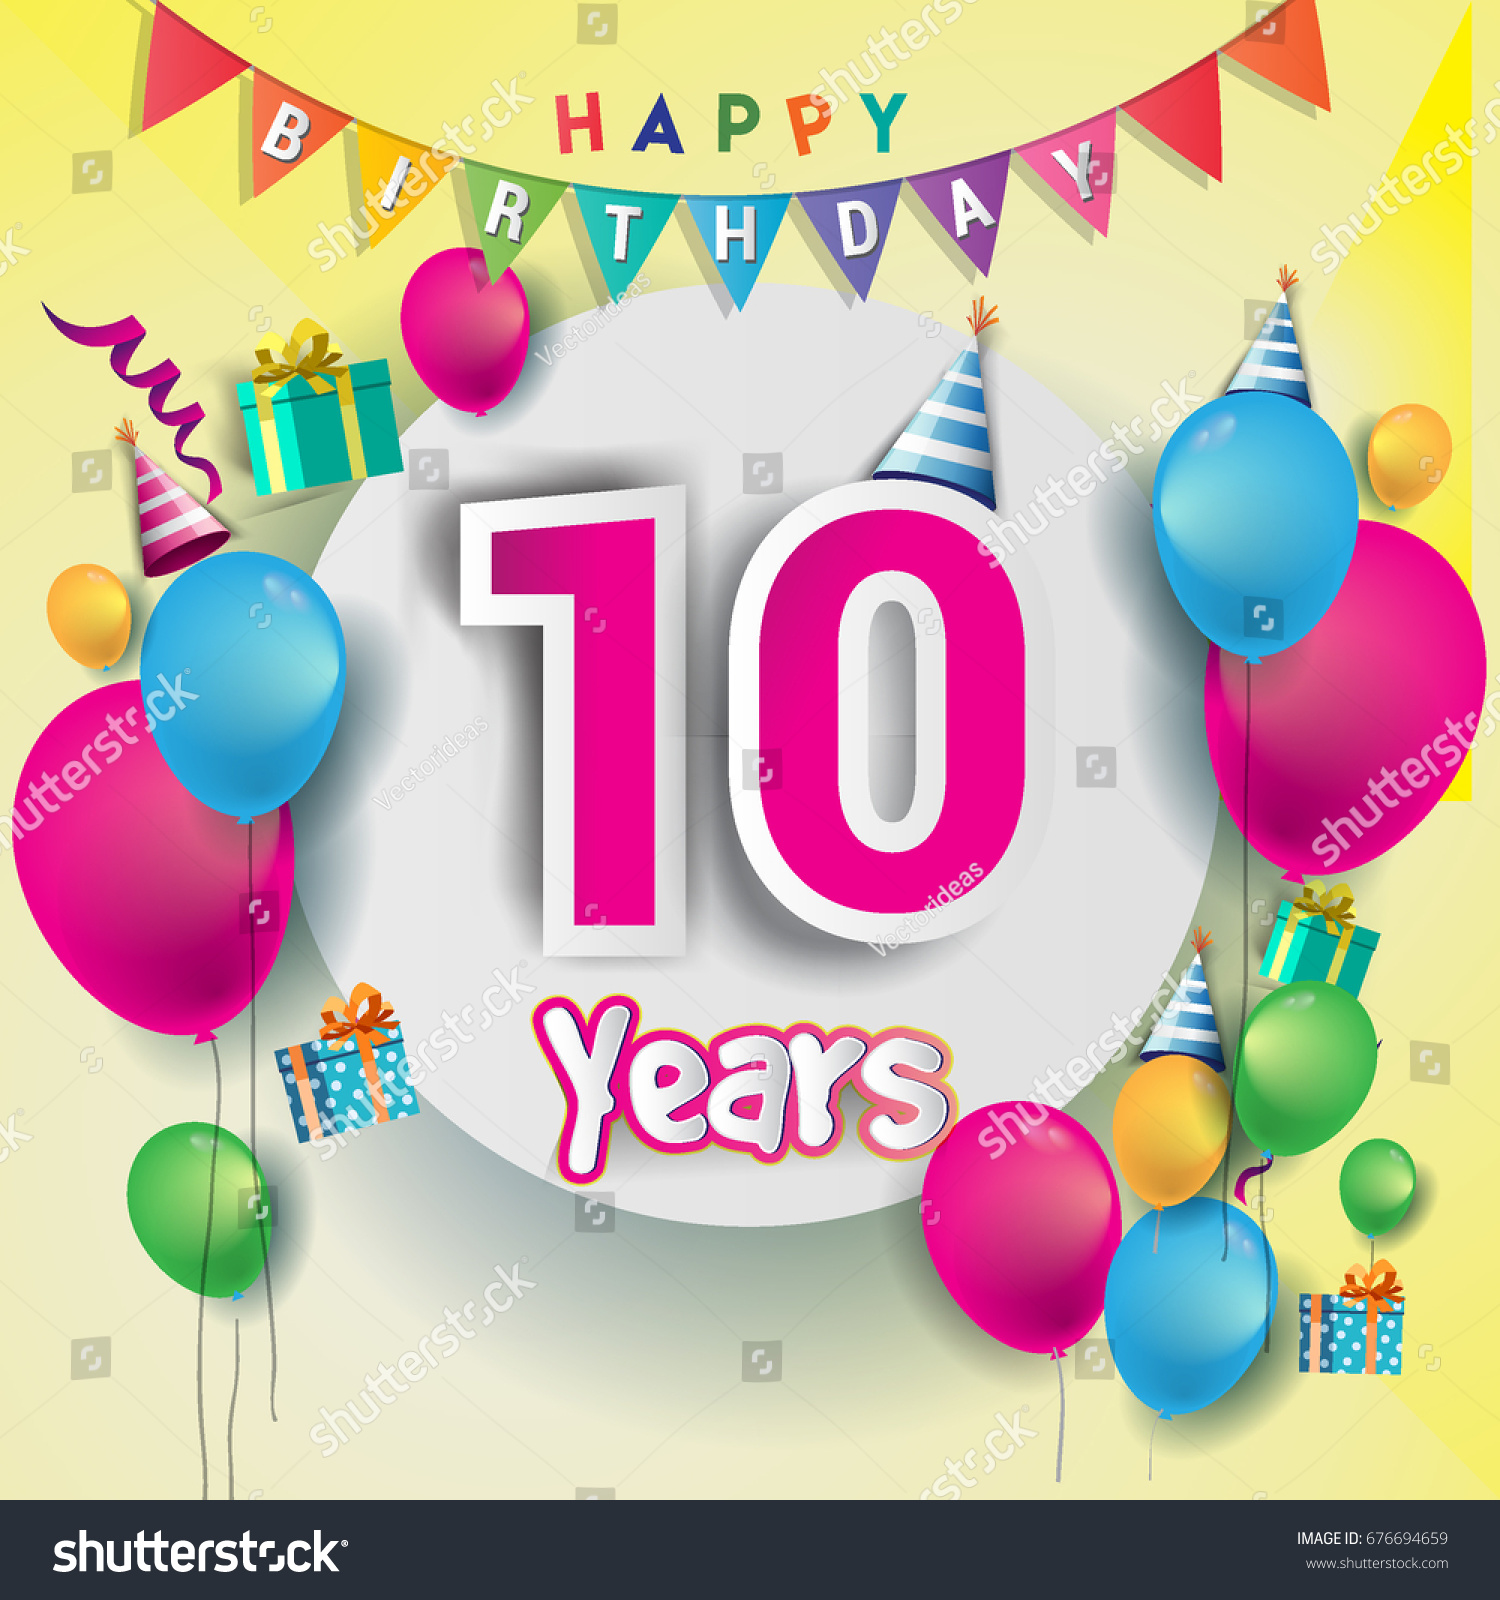 10th Years Anniversary Celebration Birthday Card Stock Vector (Royalty ...